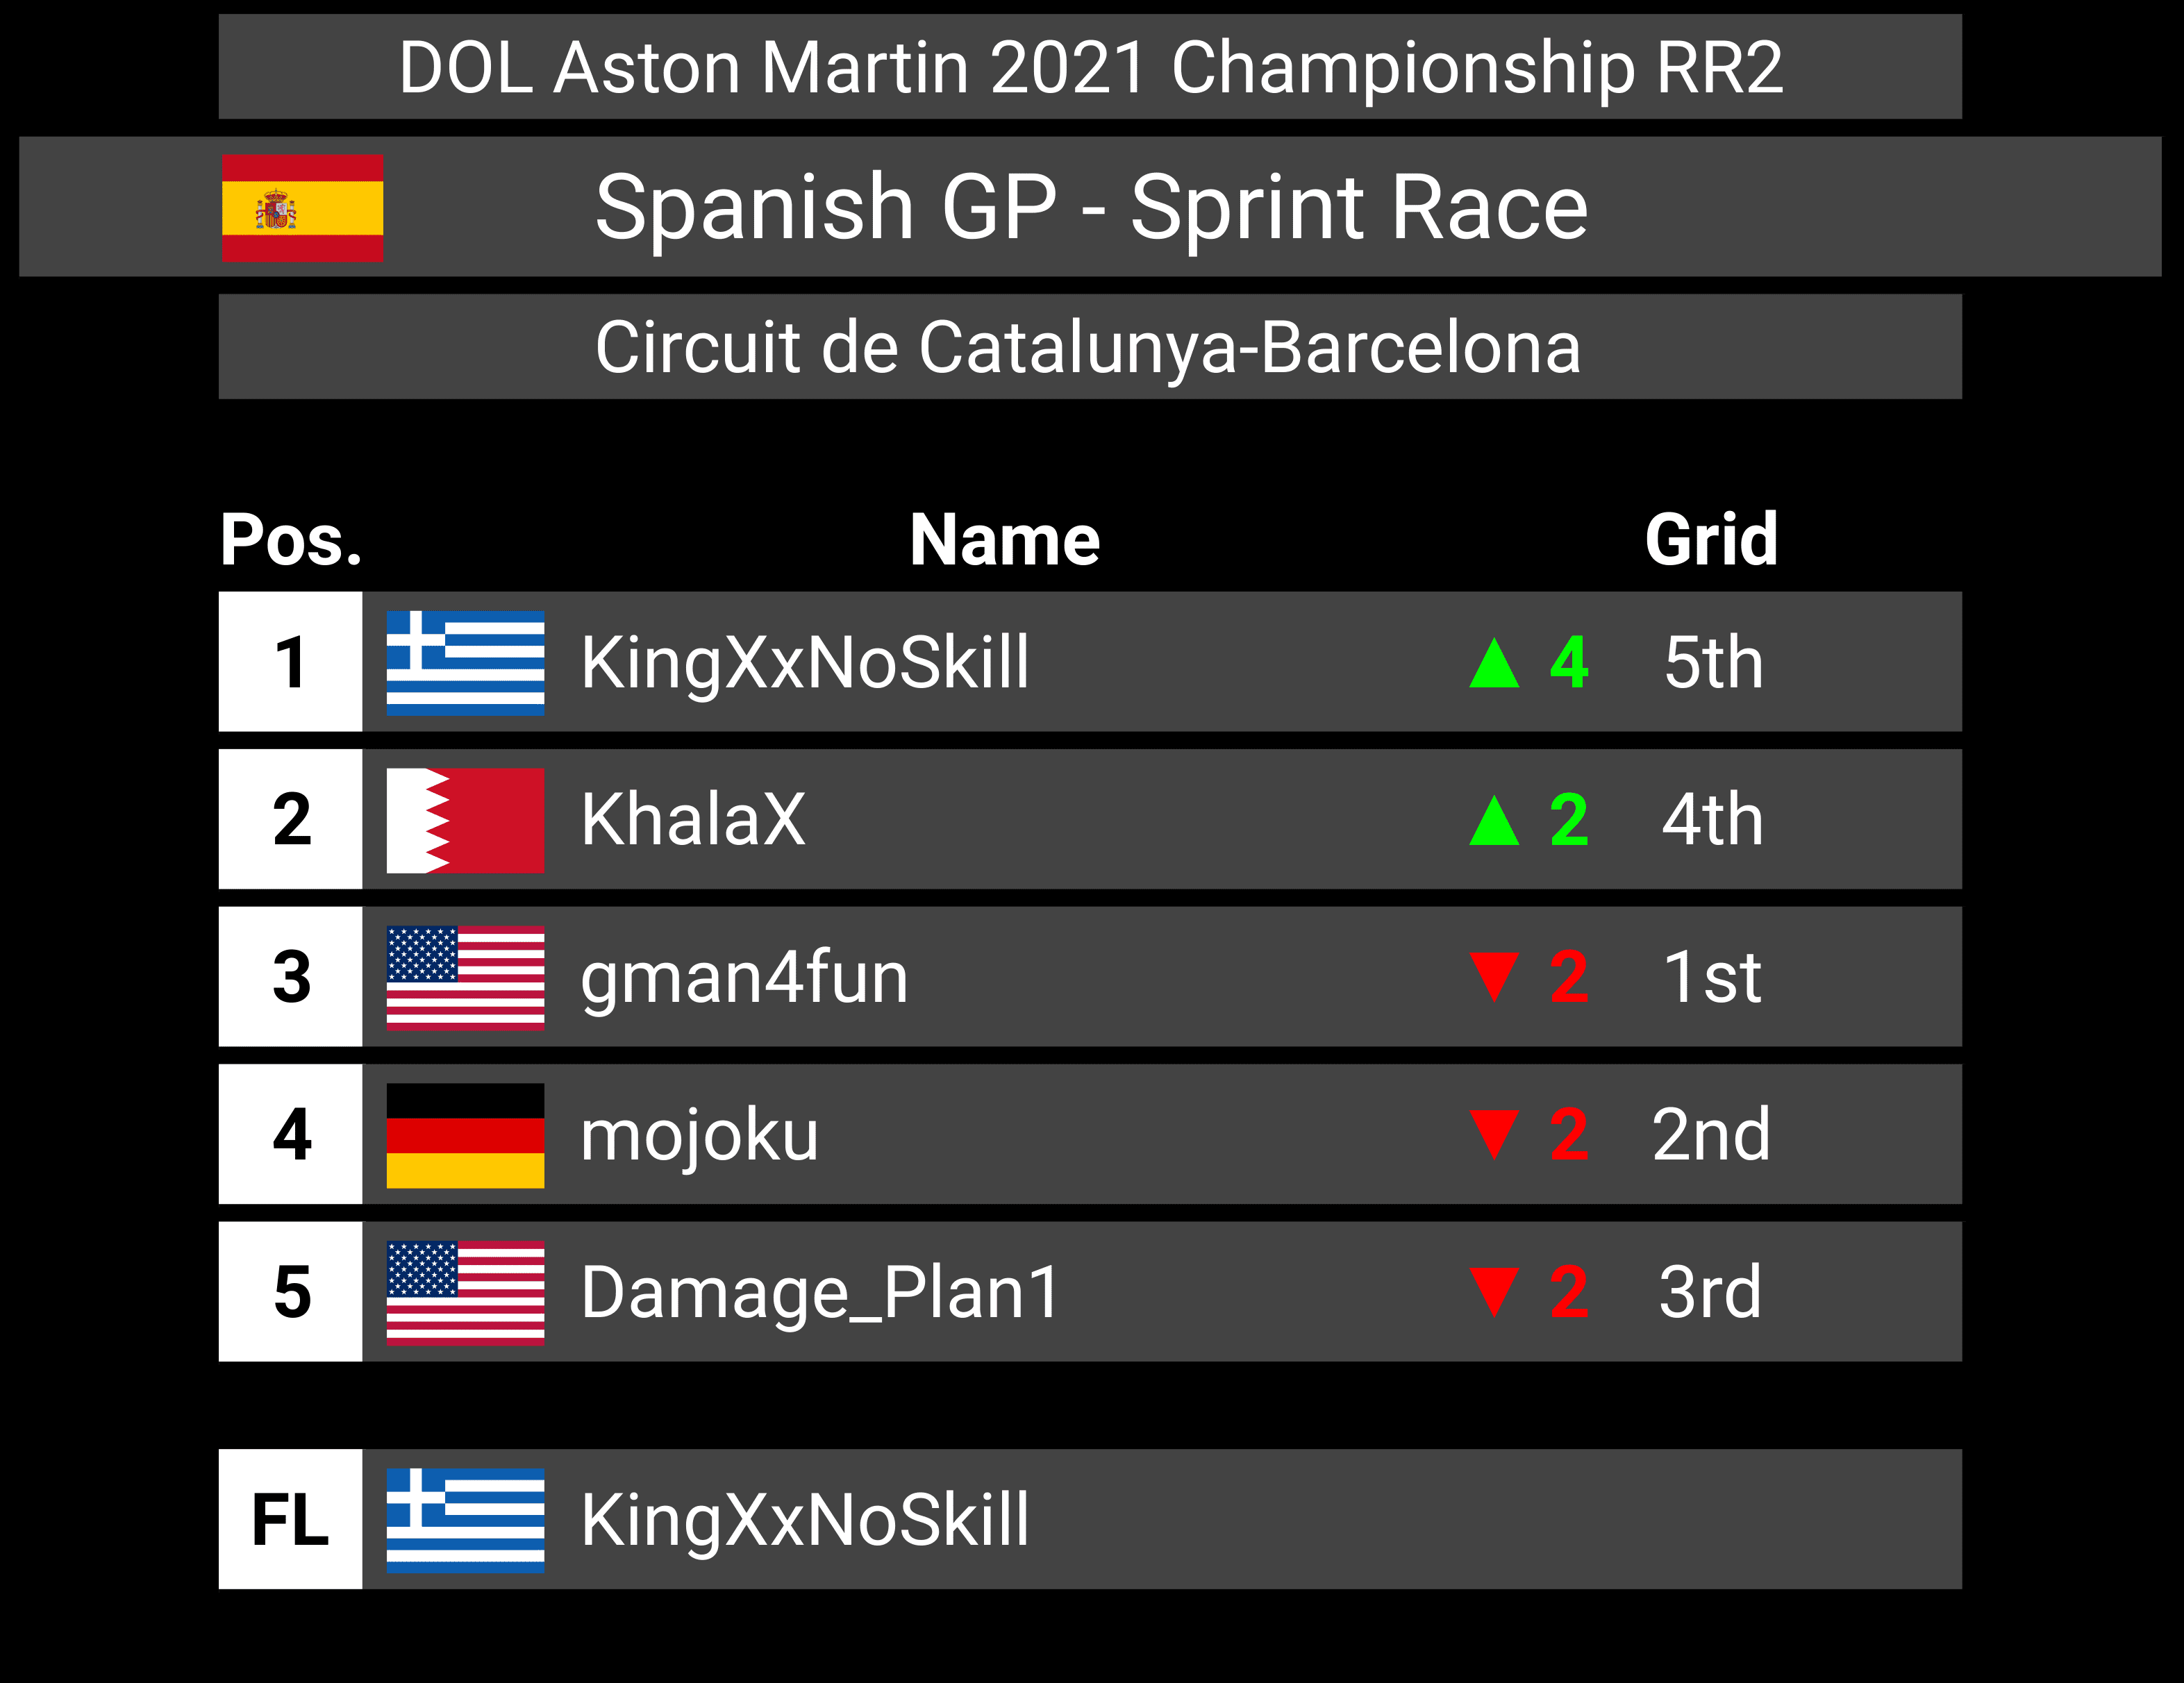 dol-aston-martin-2021-championship-spanish-gp-3.png